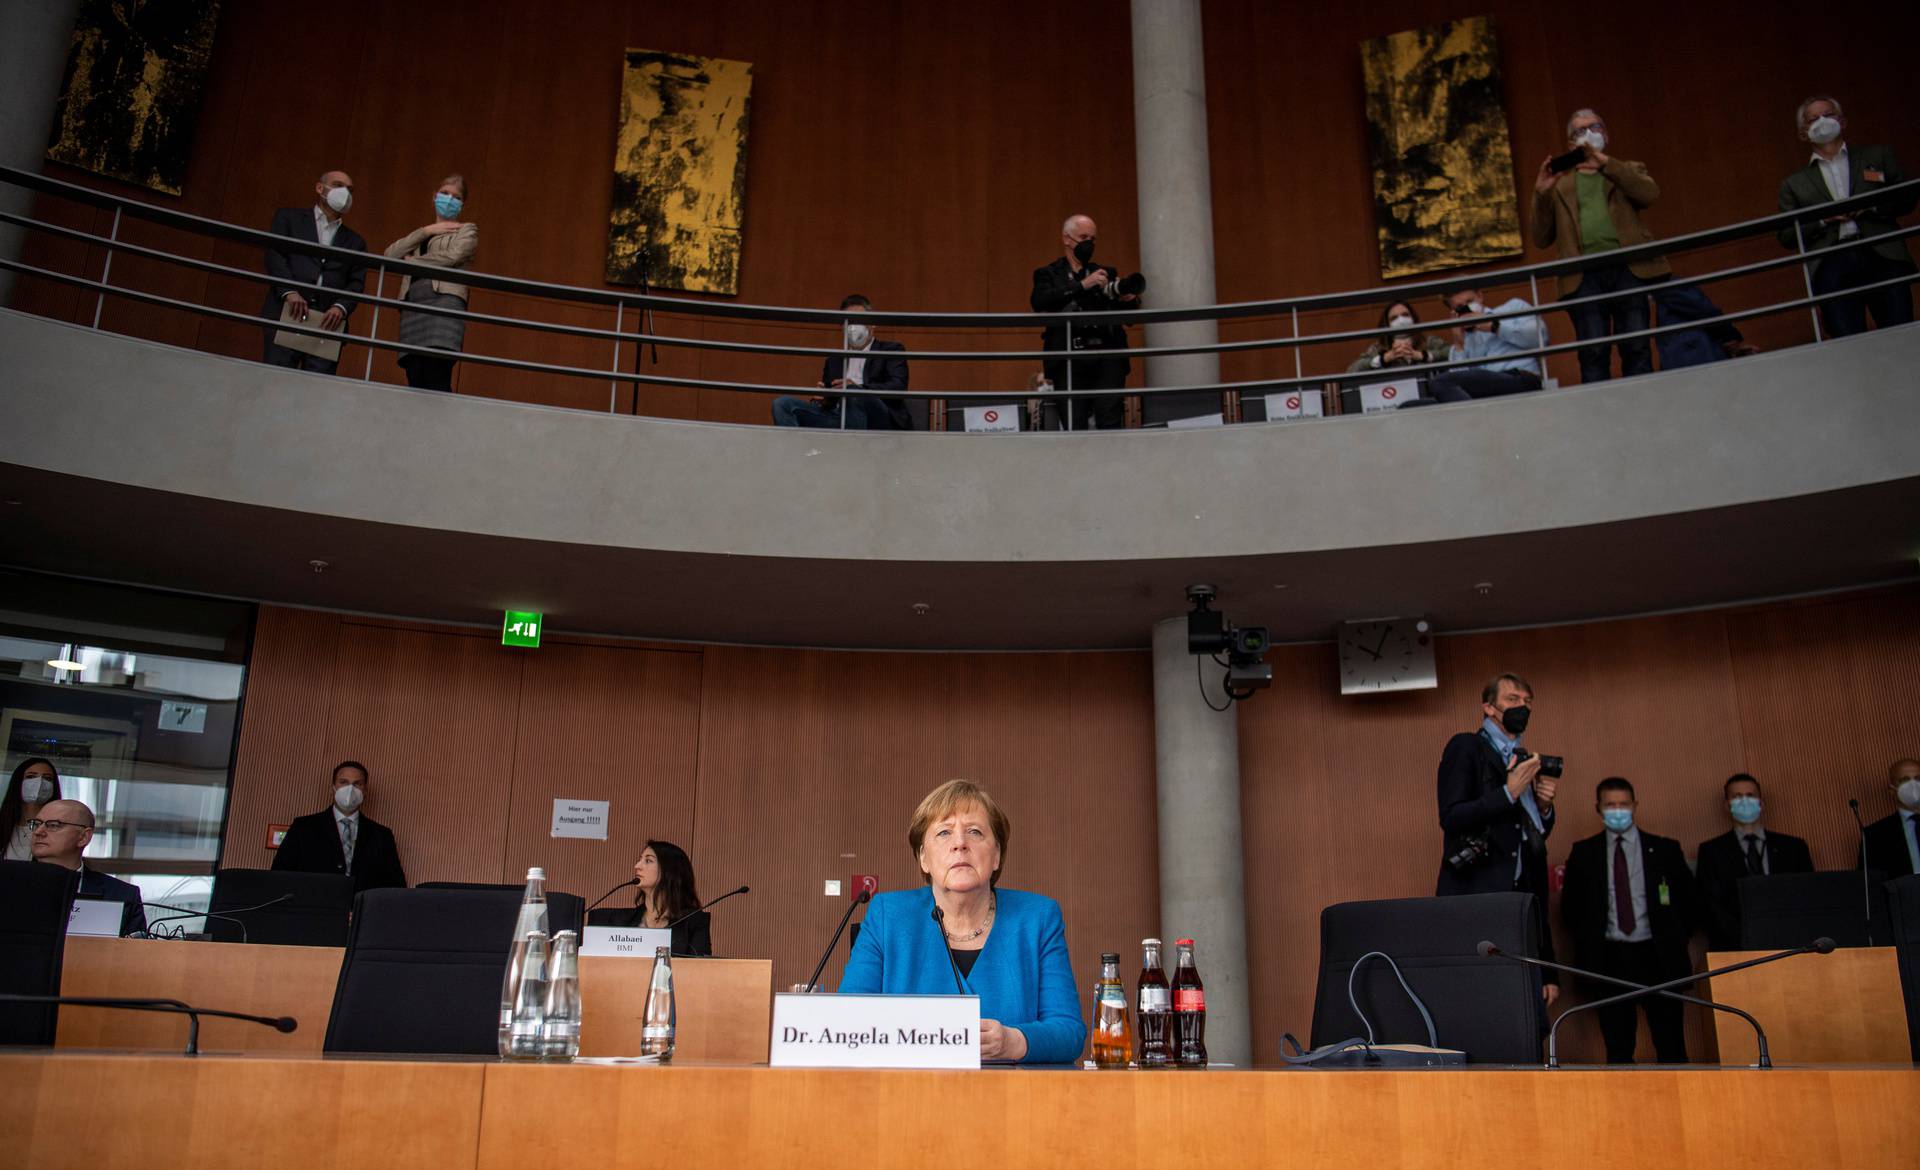 German Chancellor Merkel to testify on Wirecard